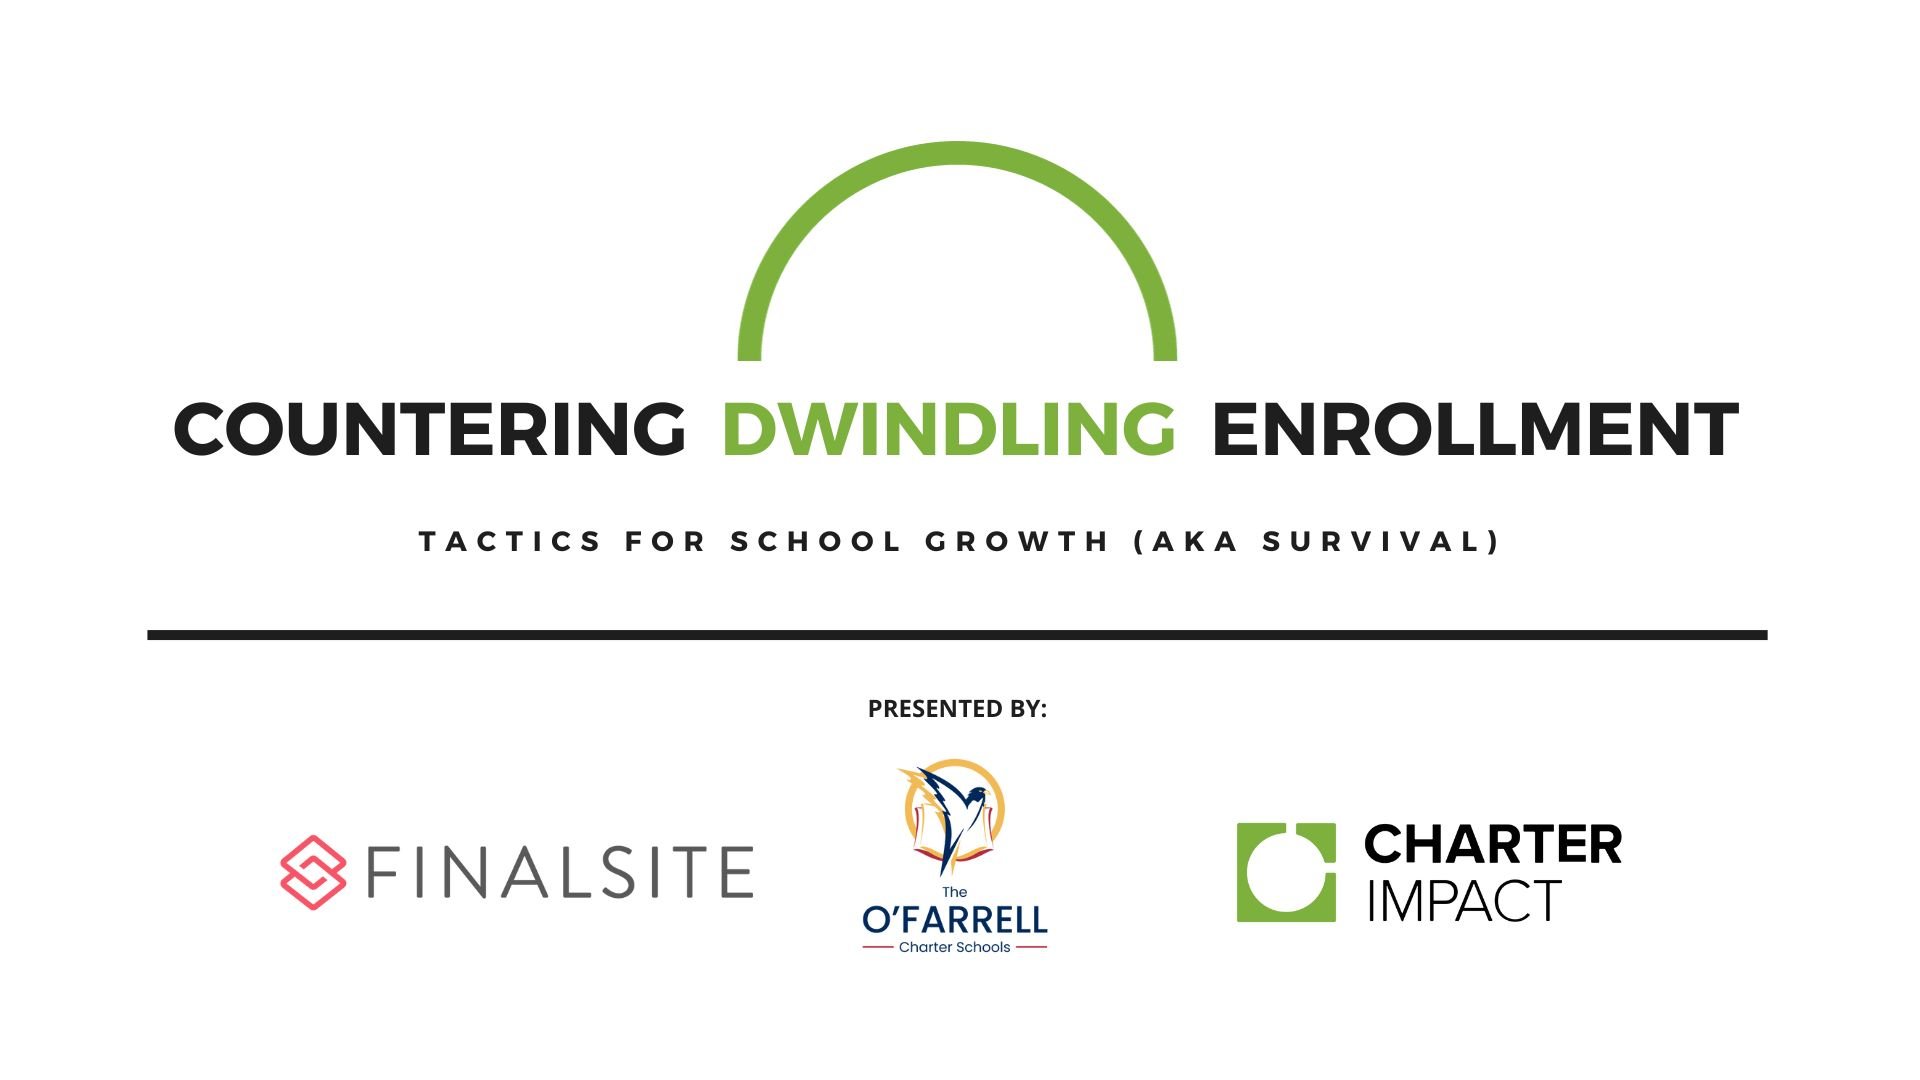 Countering Dwindling Enrollment